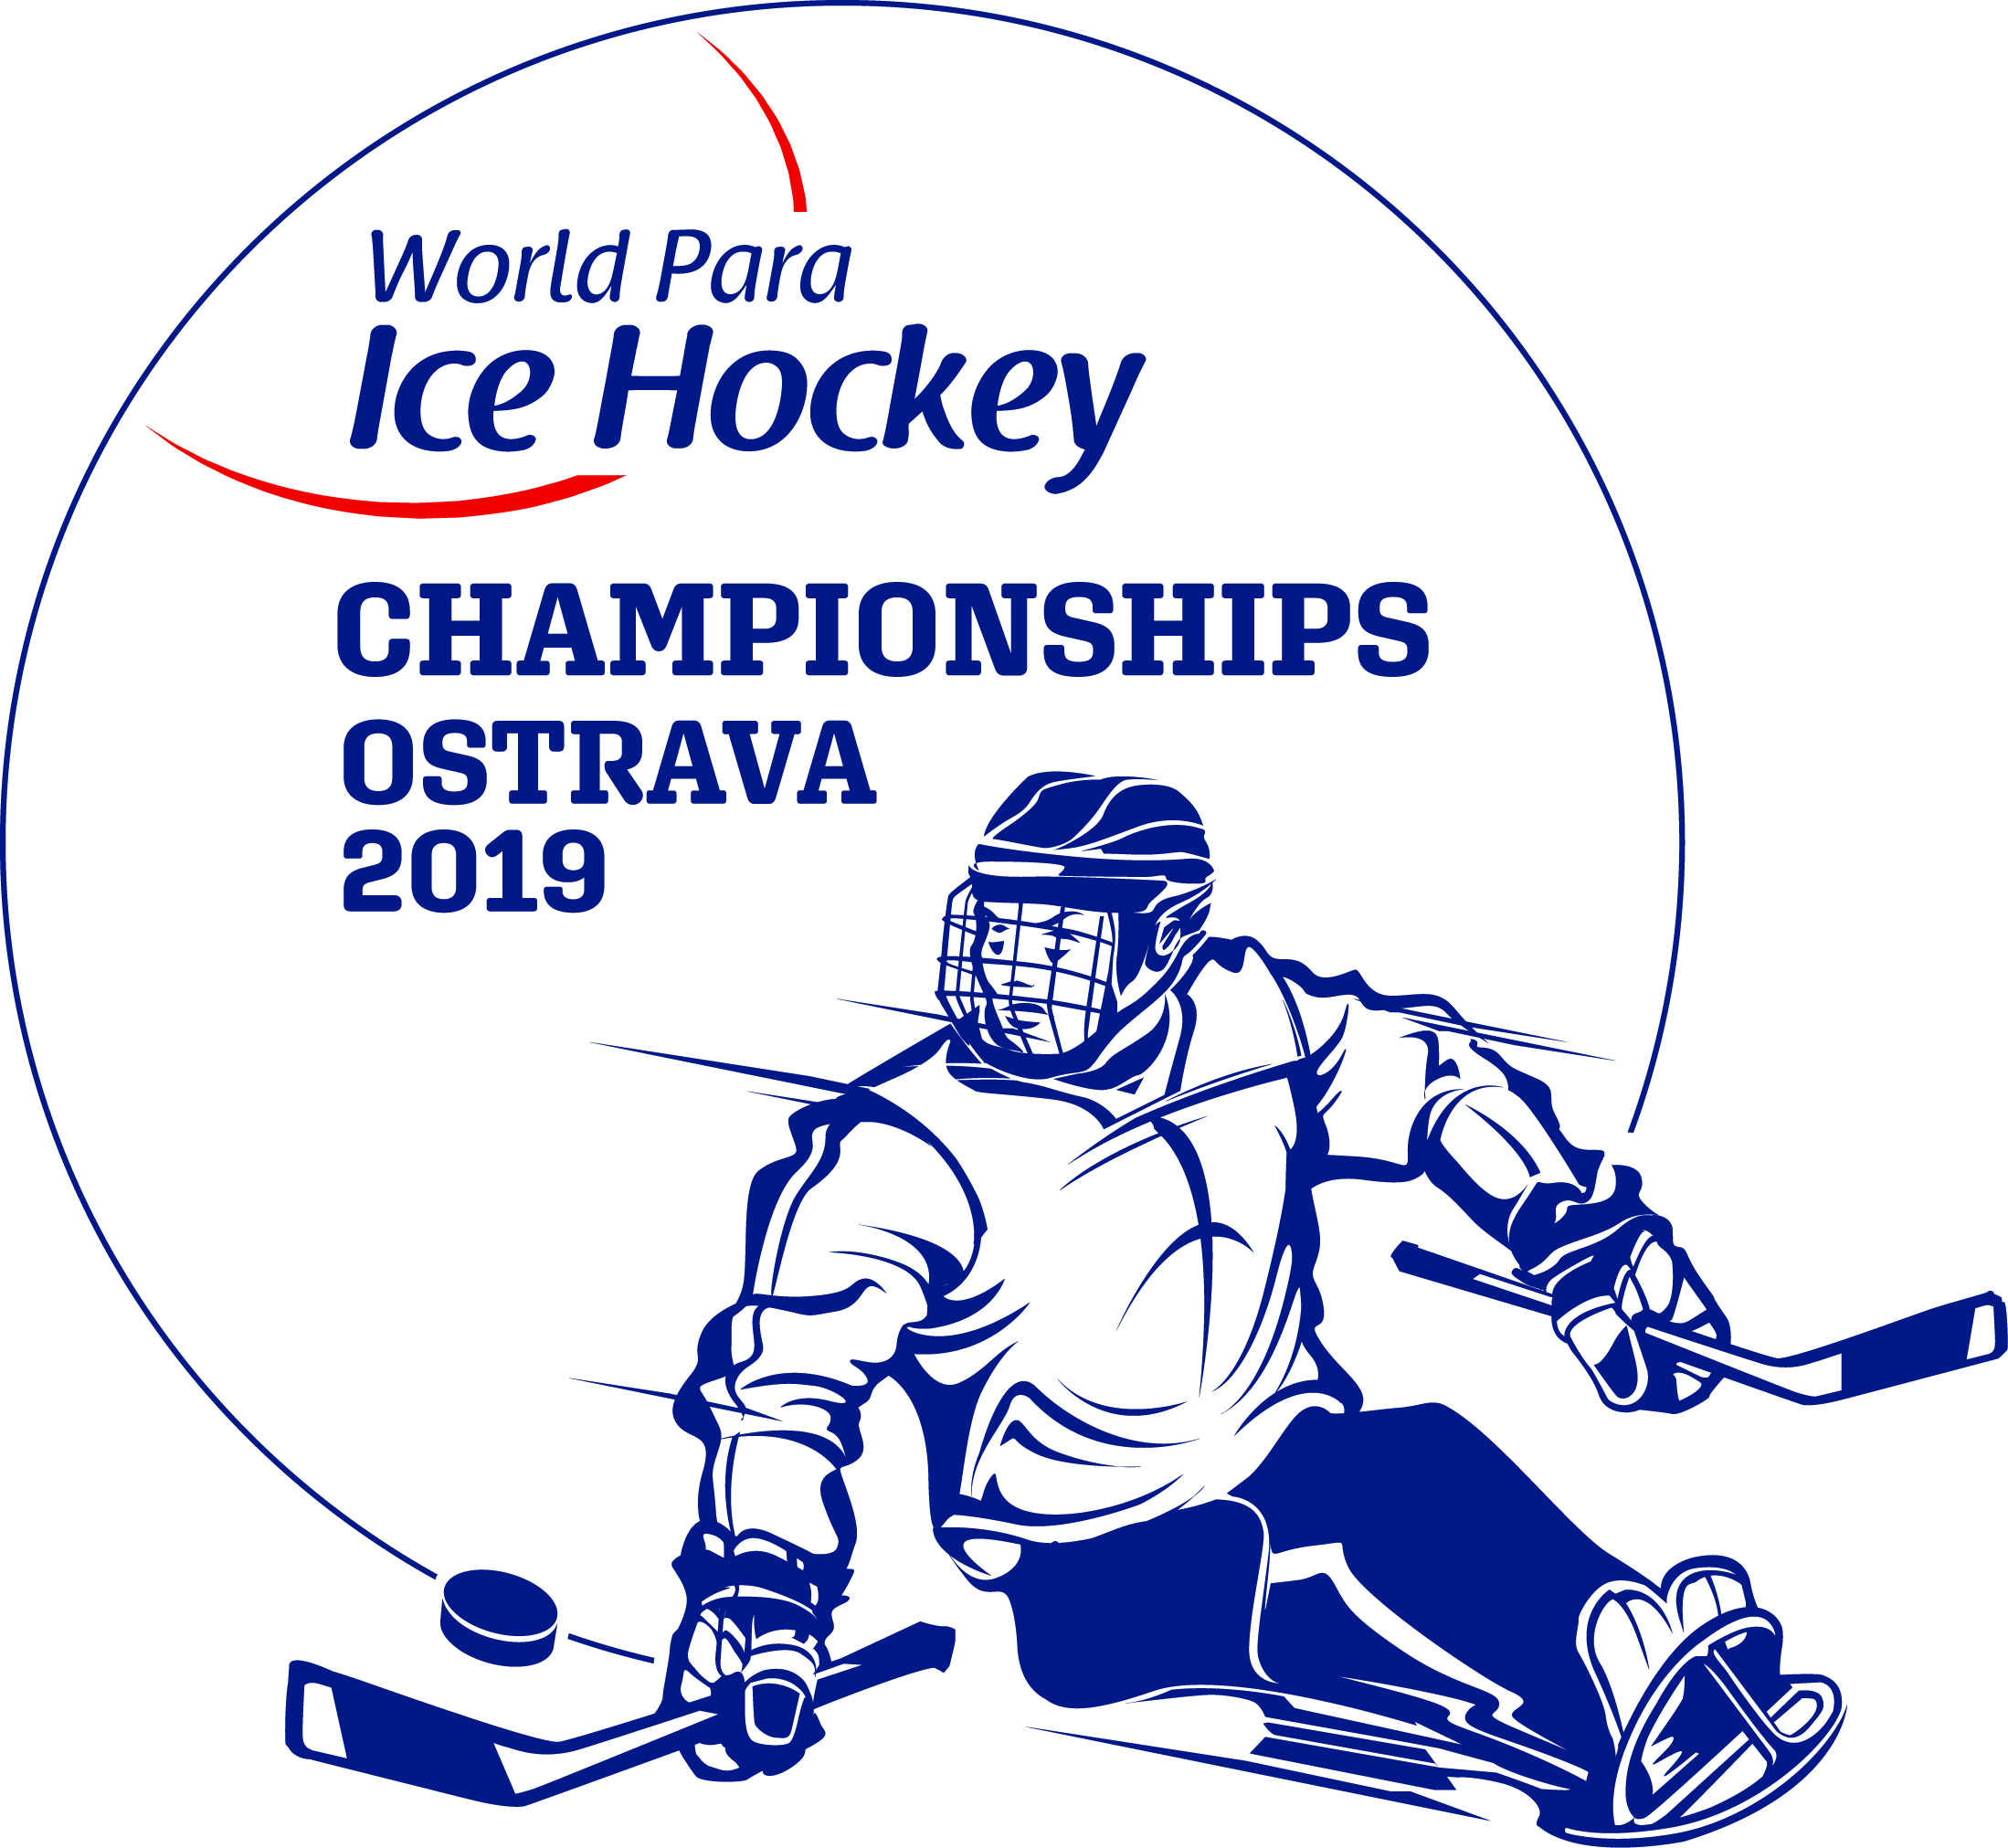 the official logo of the Ostrava 2019 World Para Ice Hockey Championships